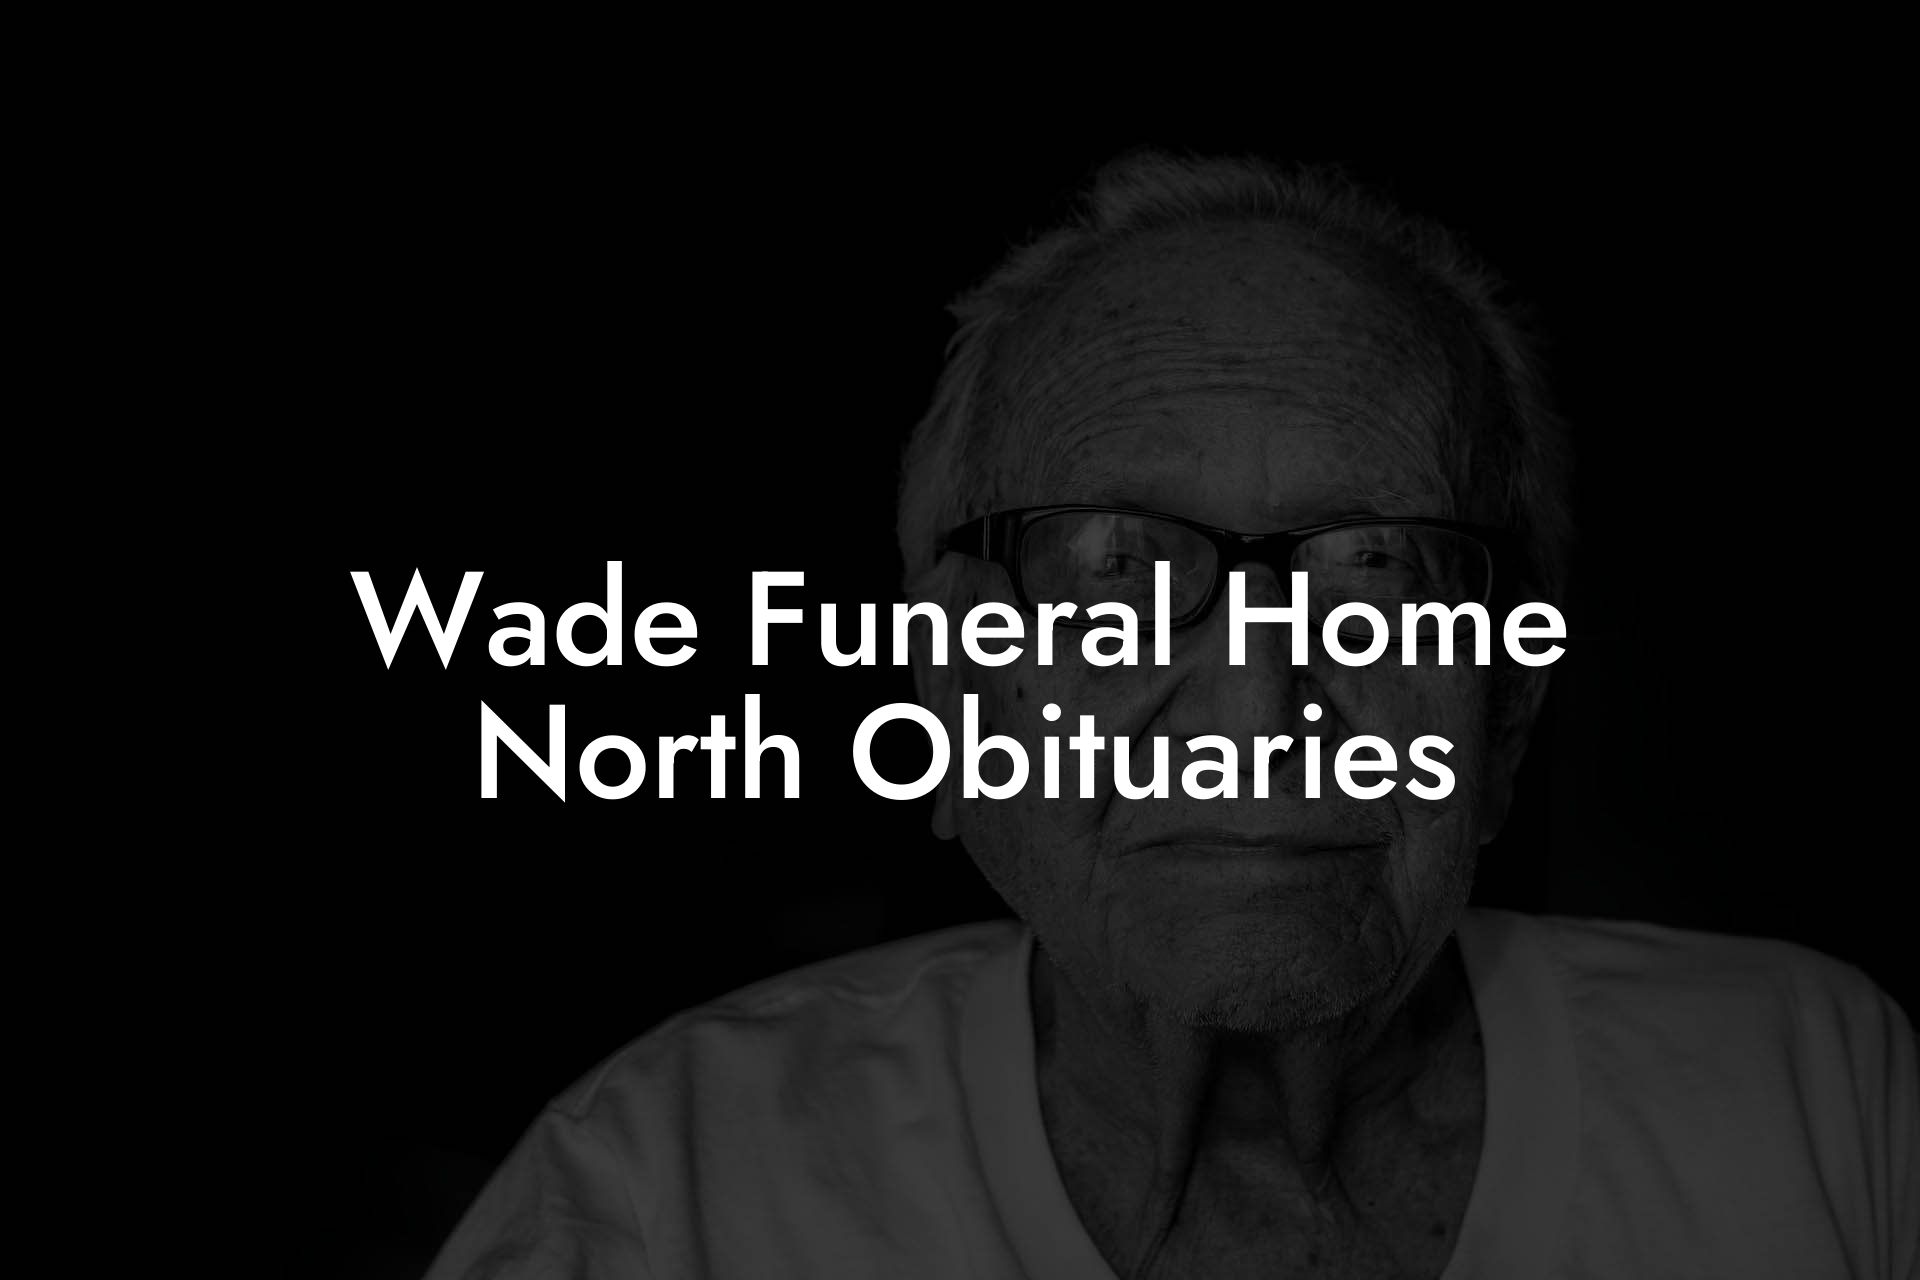 Wade Funeral Home North Obituaries